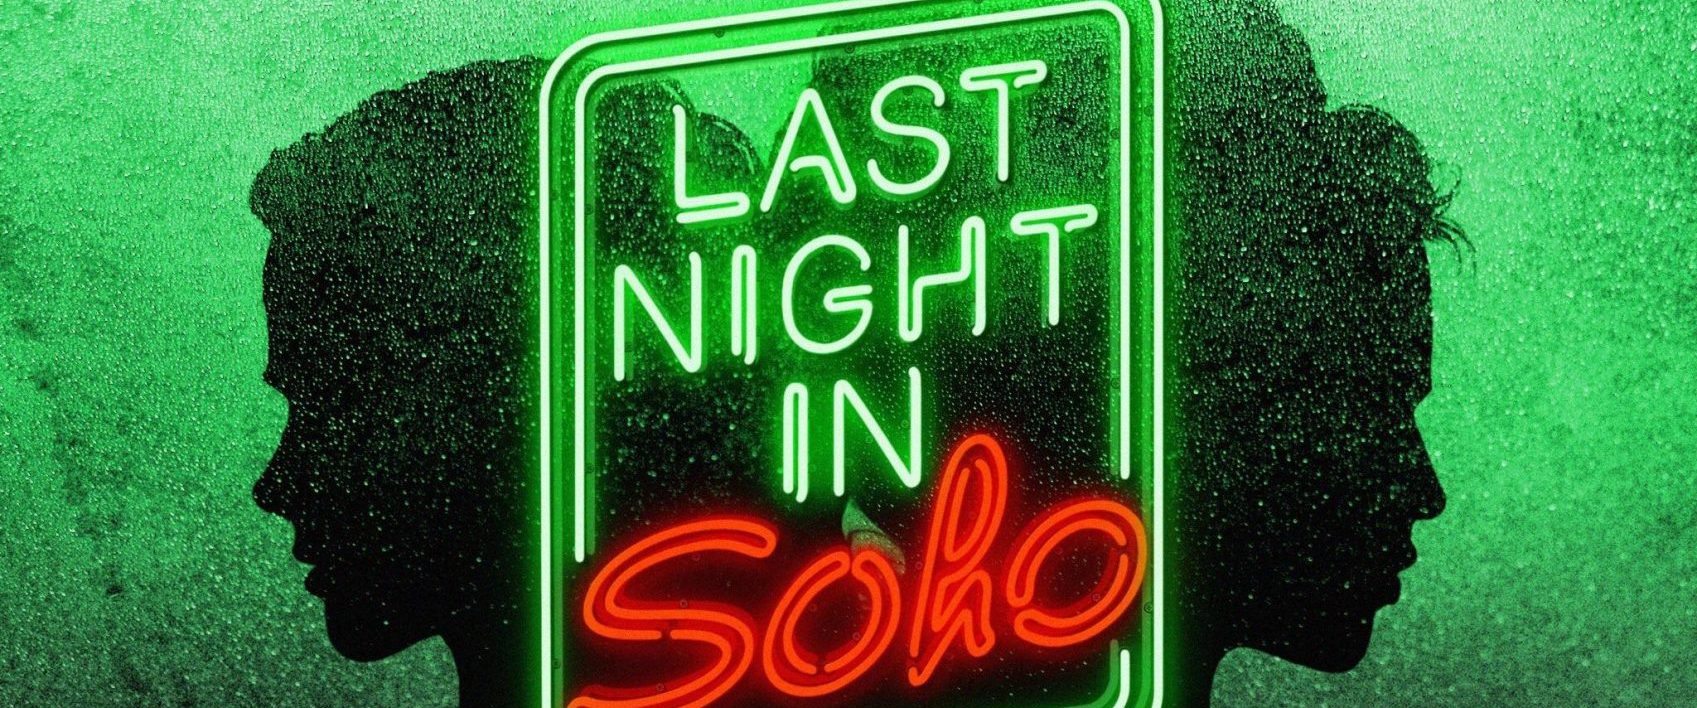 Last Night in Soho, la nuova pellicola horror di Edgar Wright thumbnail